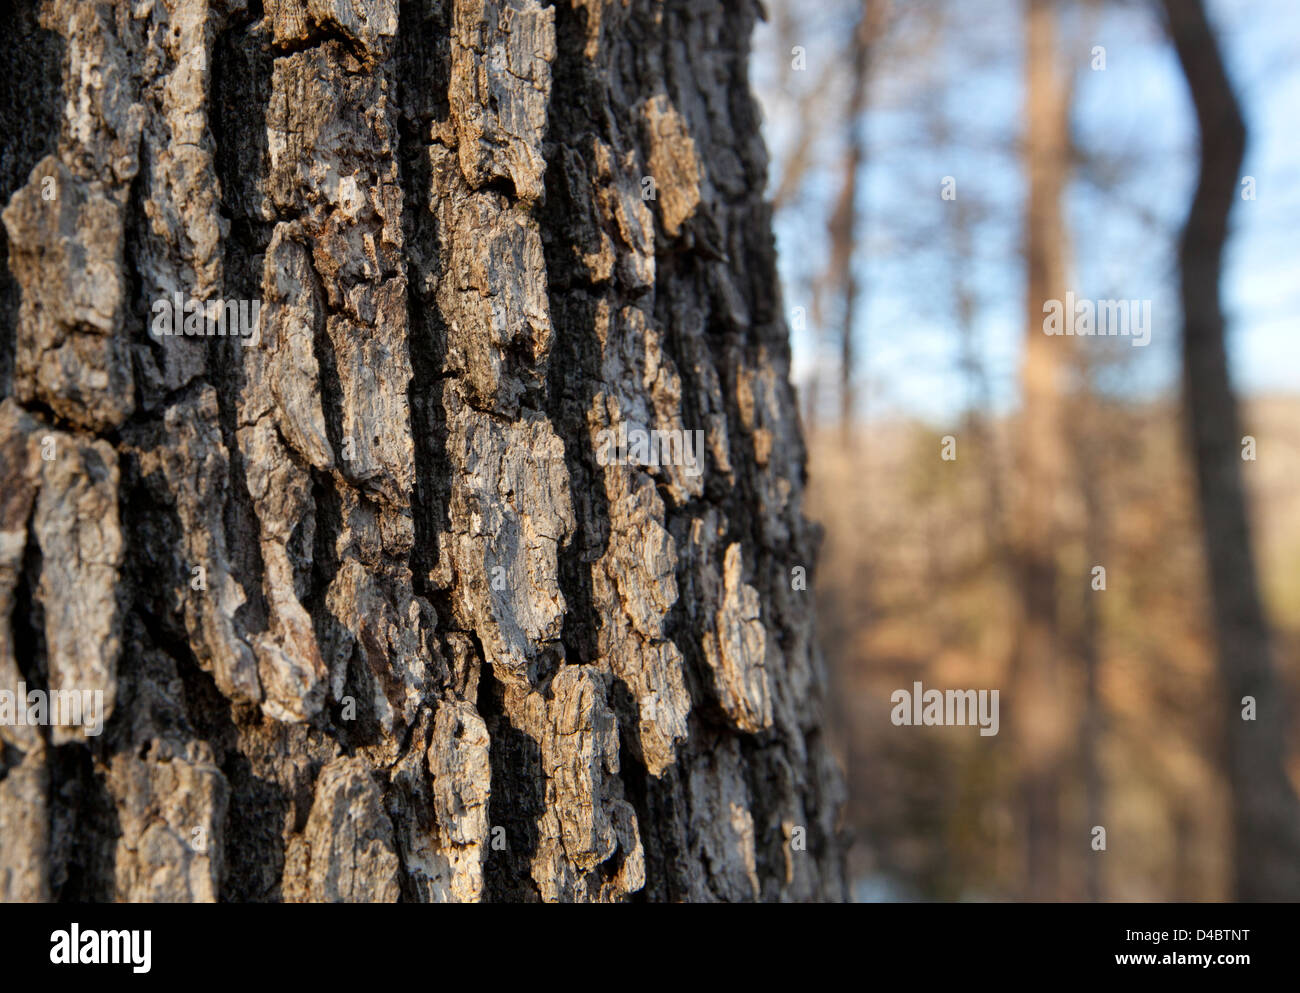 A detail of tree bark. Stock Photo